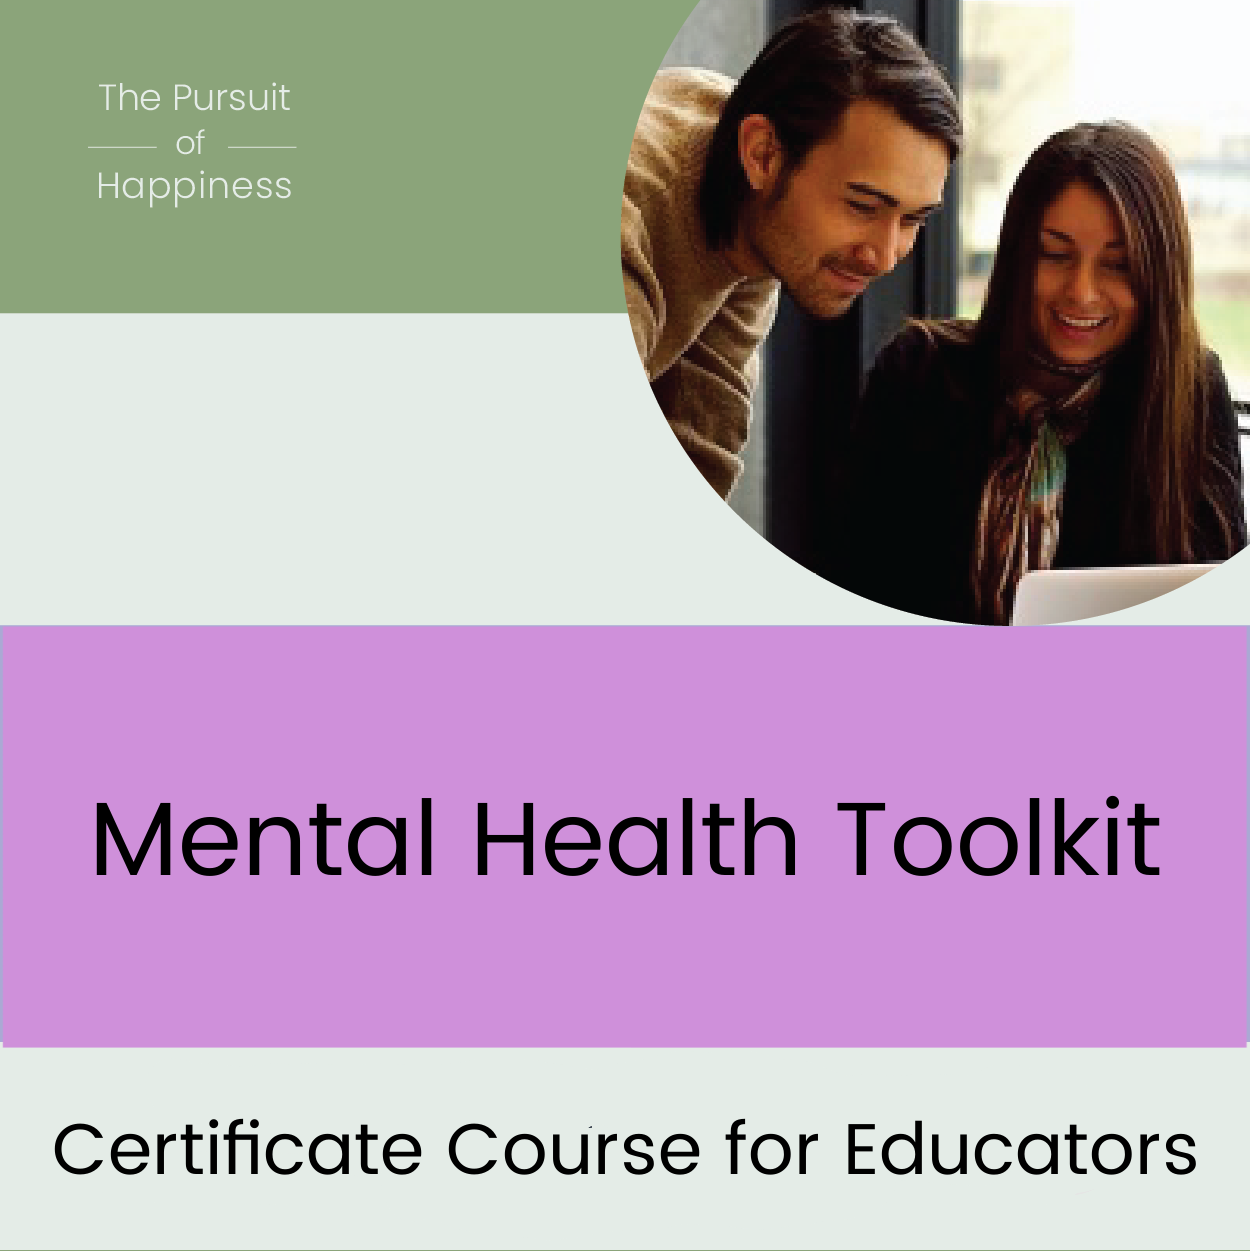 Mental Health Course